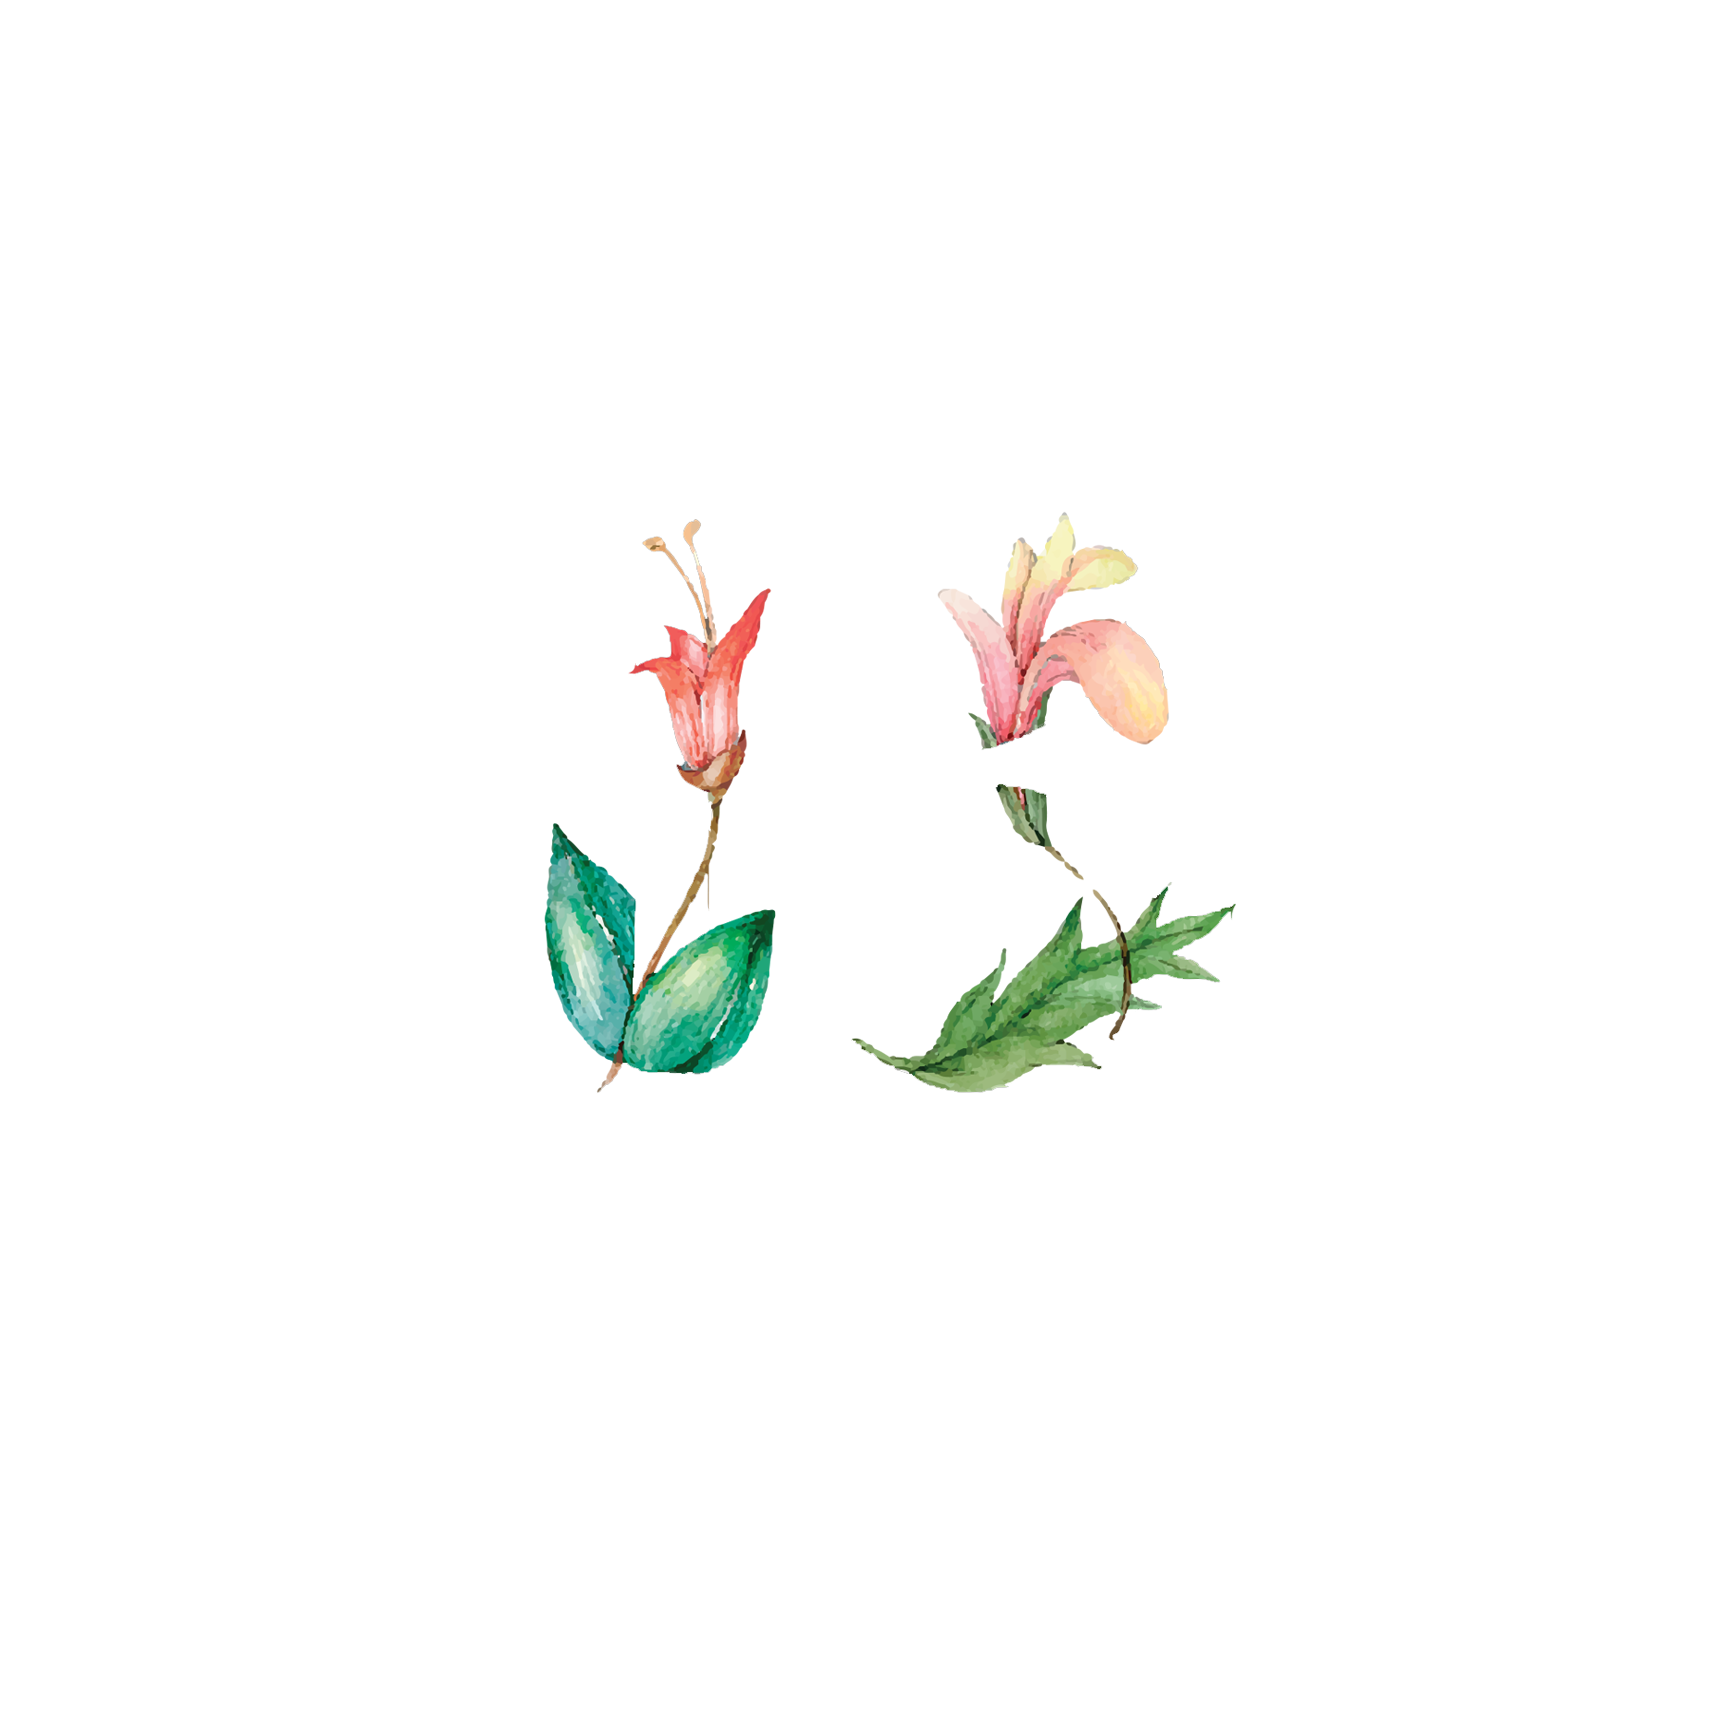 Click to read Day 13 - Senses